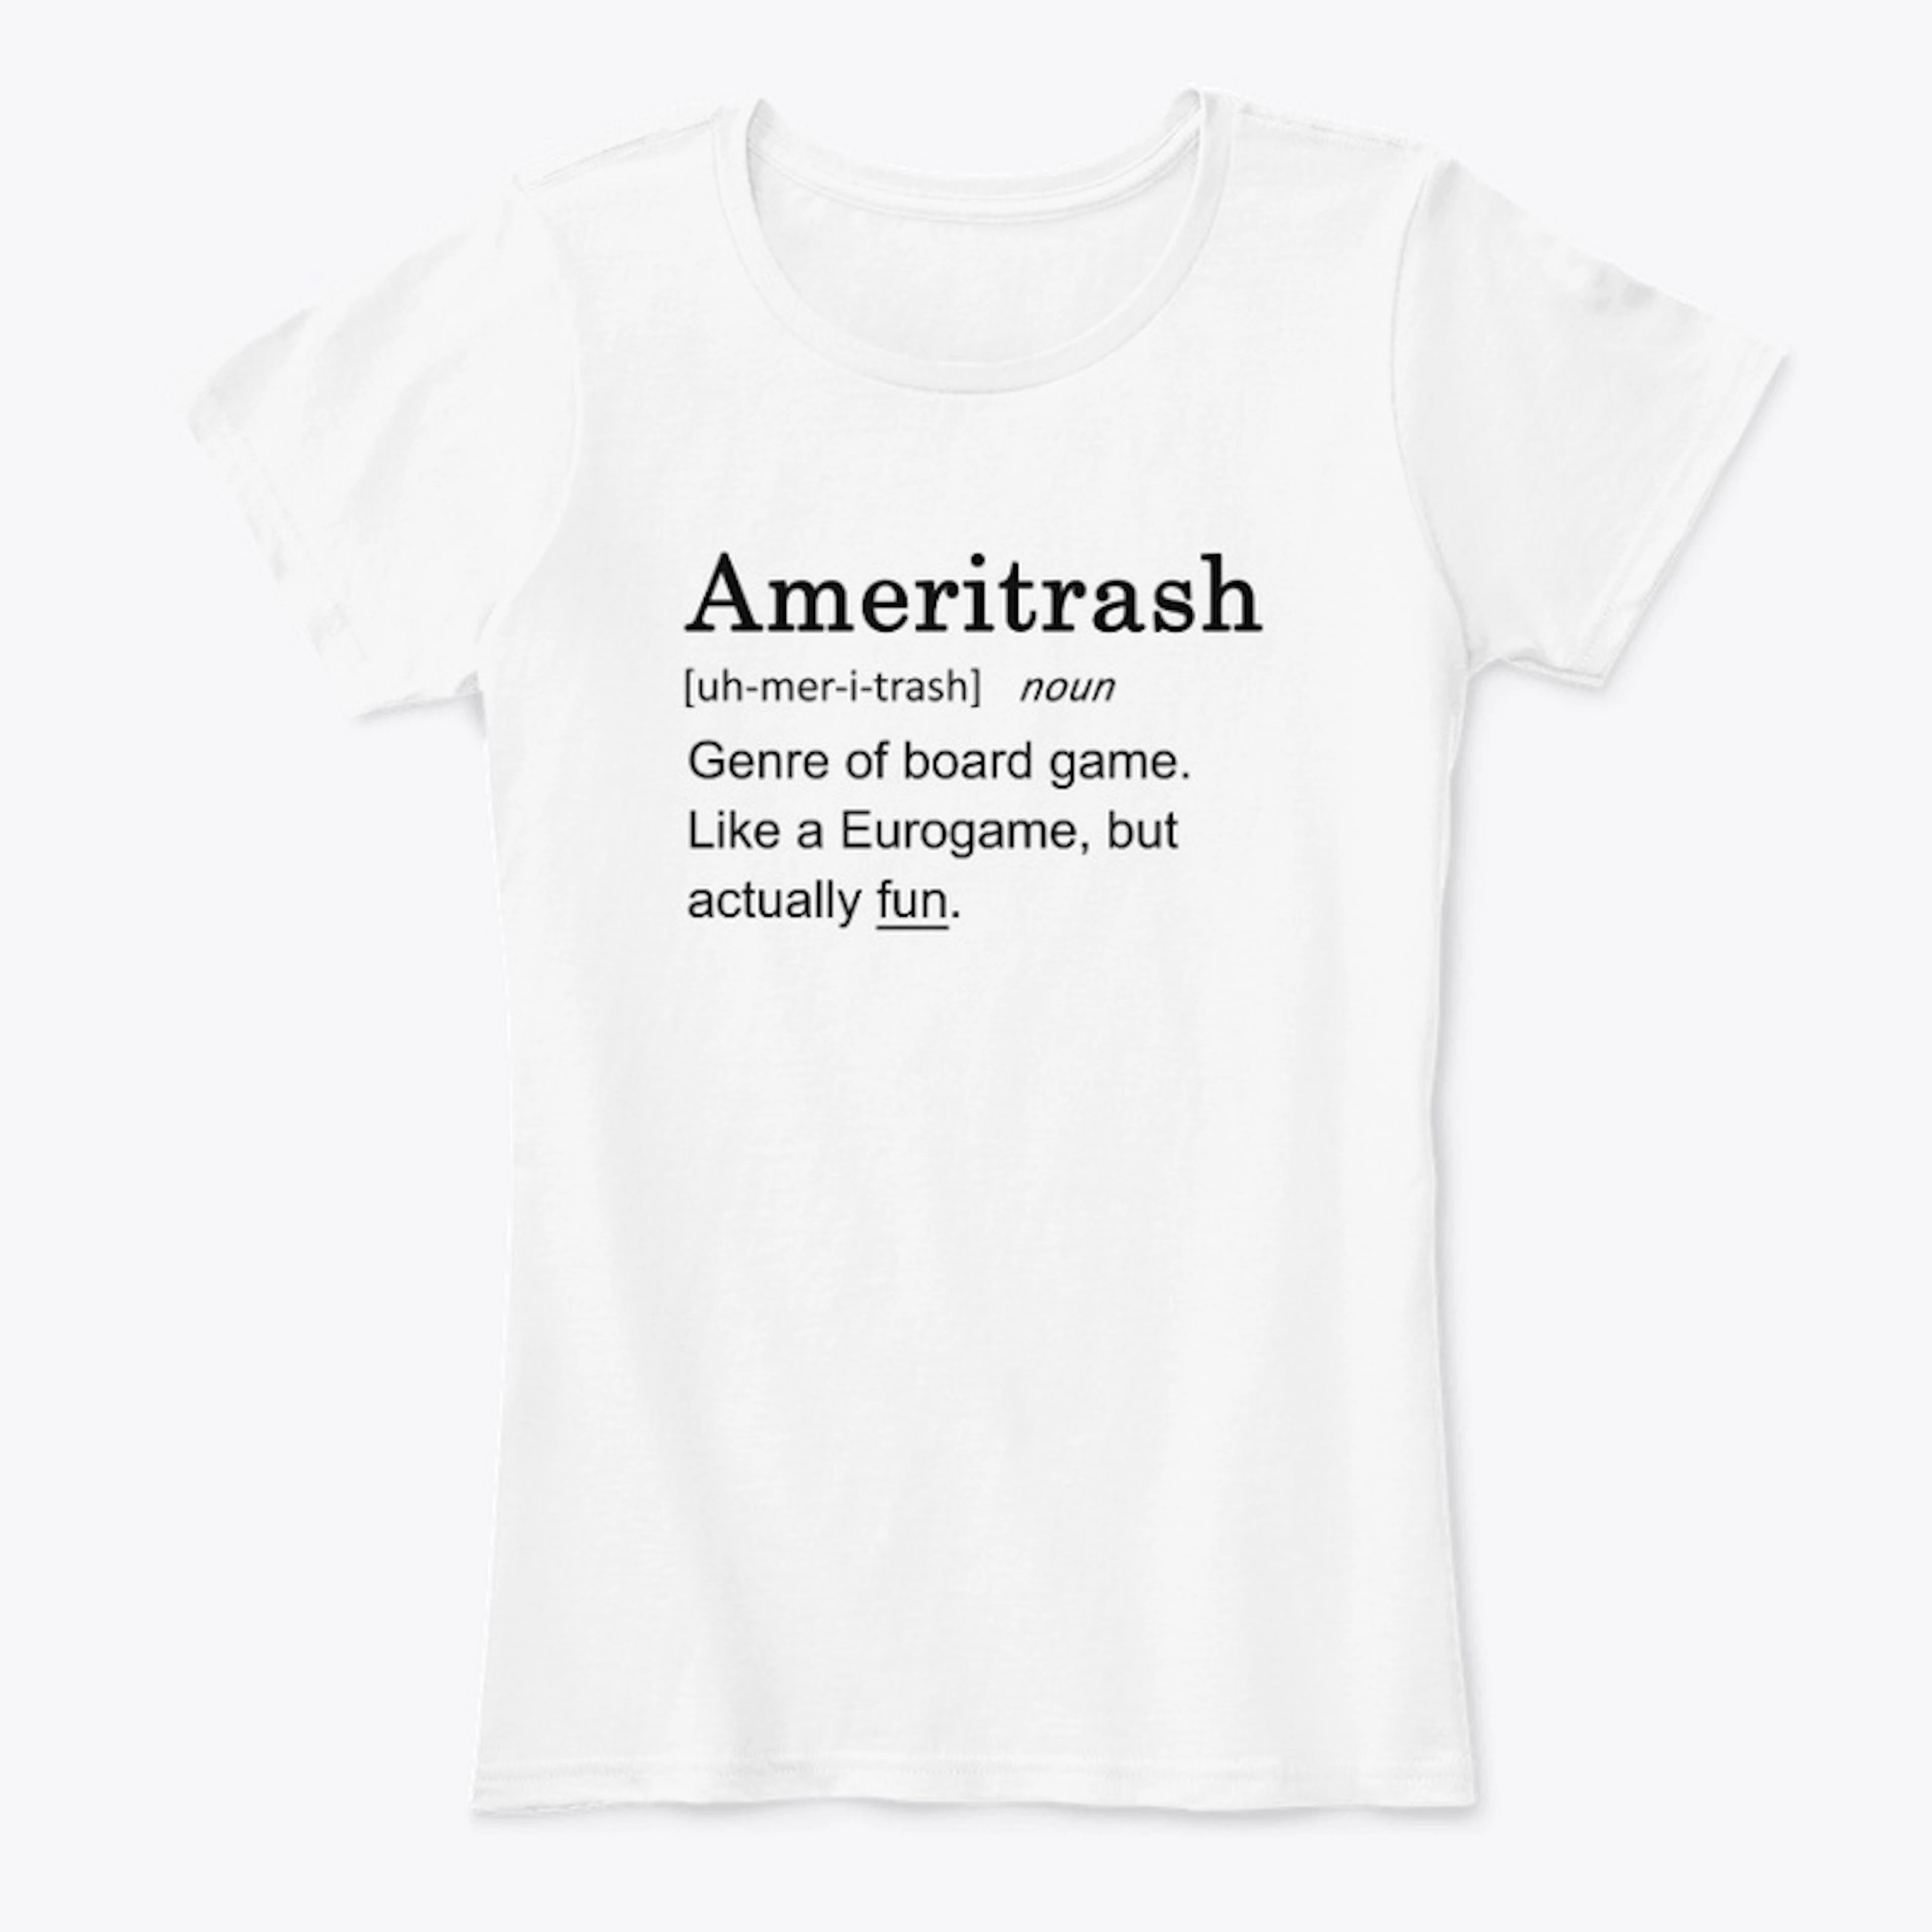 Ameritrash = Fun